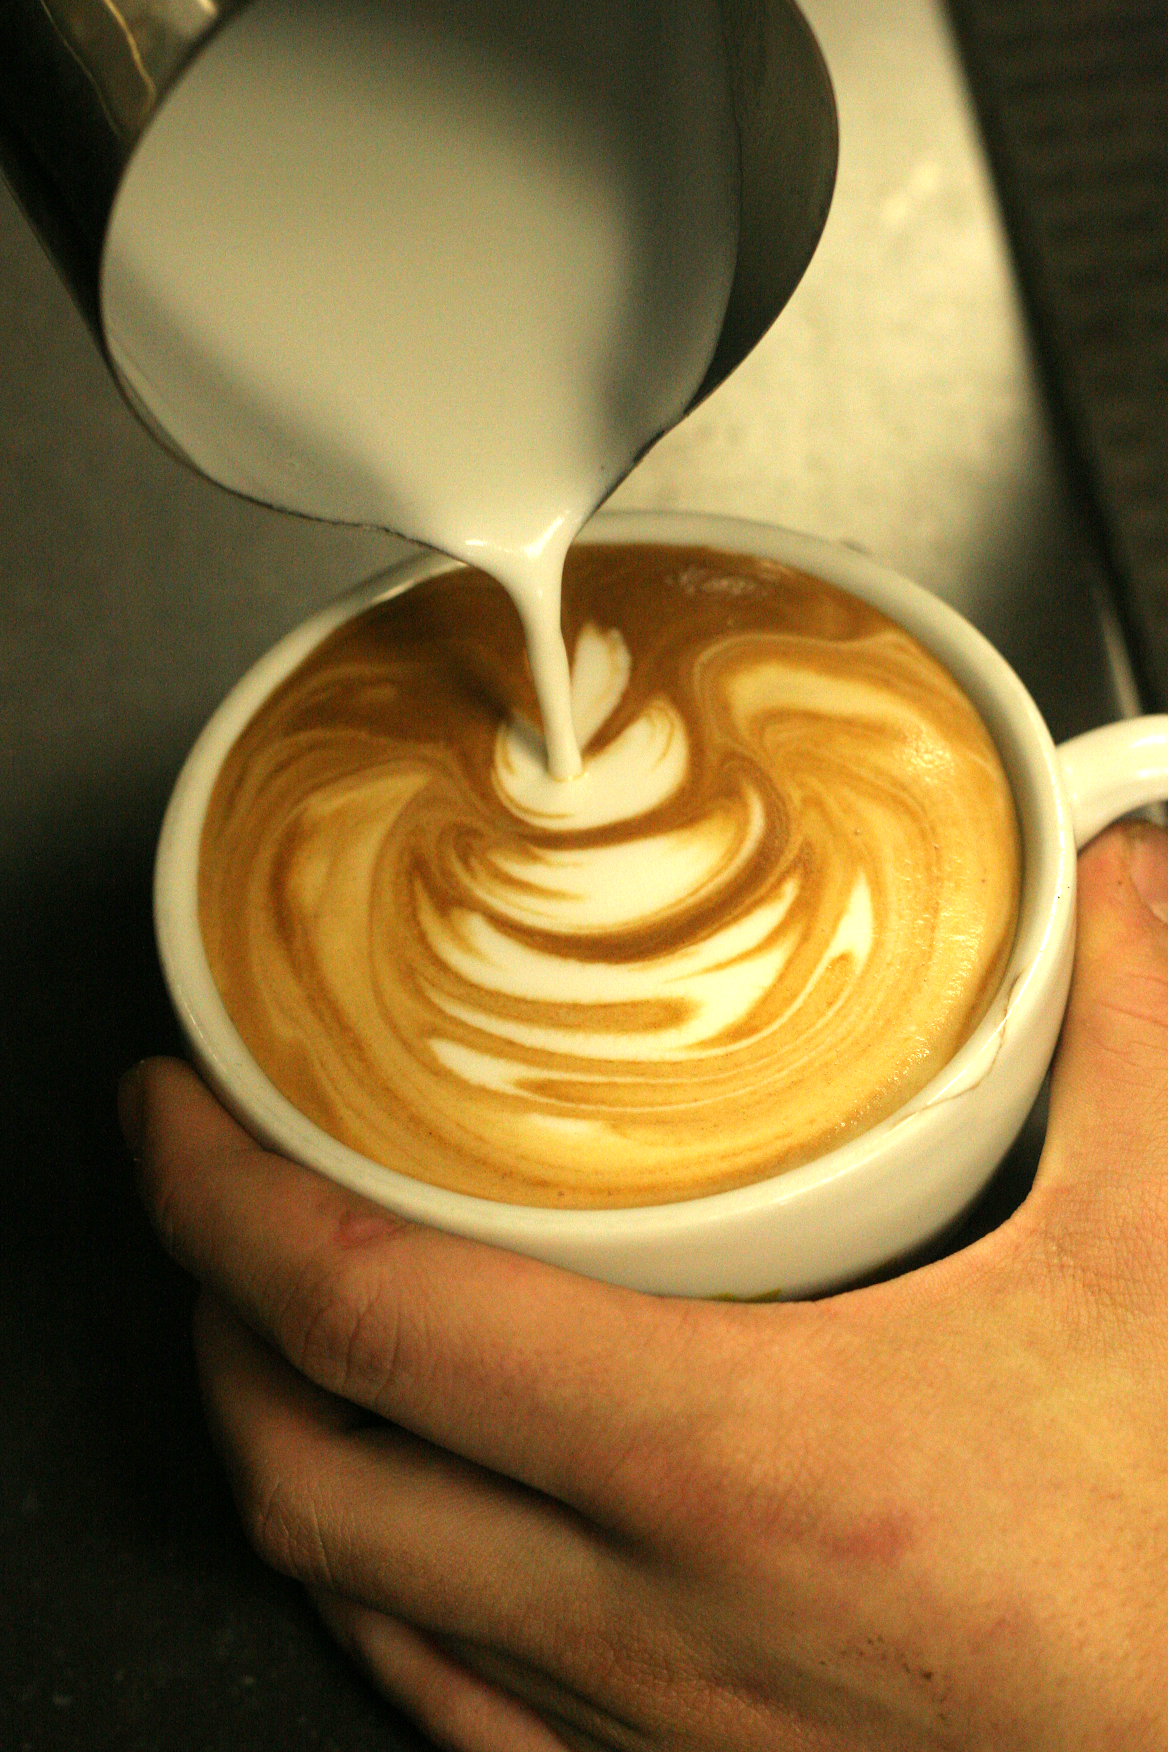 The Science of Steamed Milk: Understanding Your Latte Art